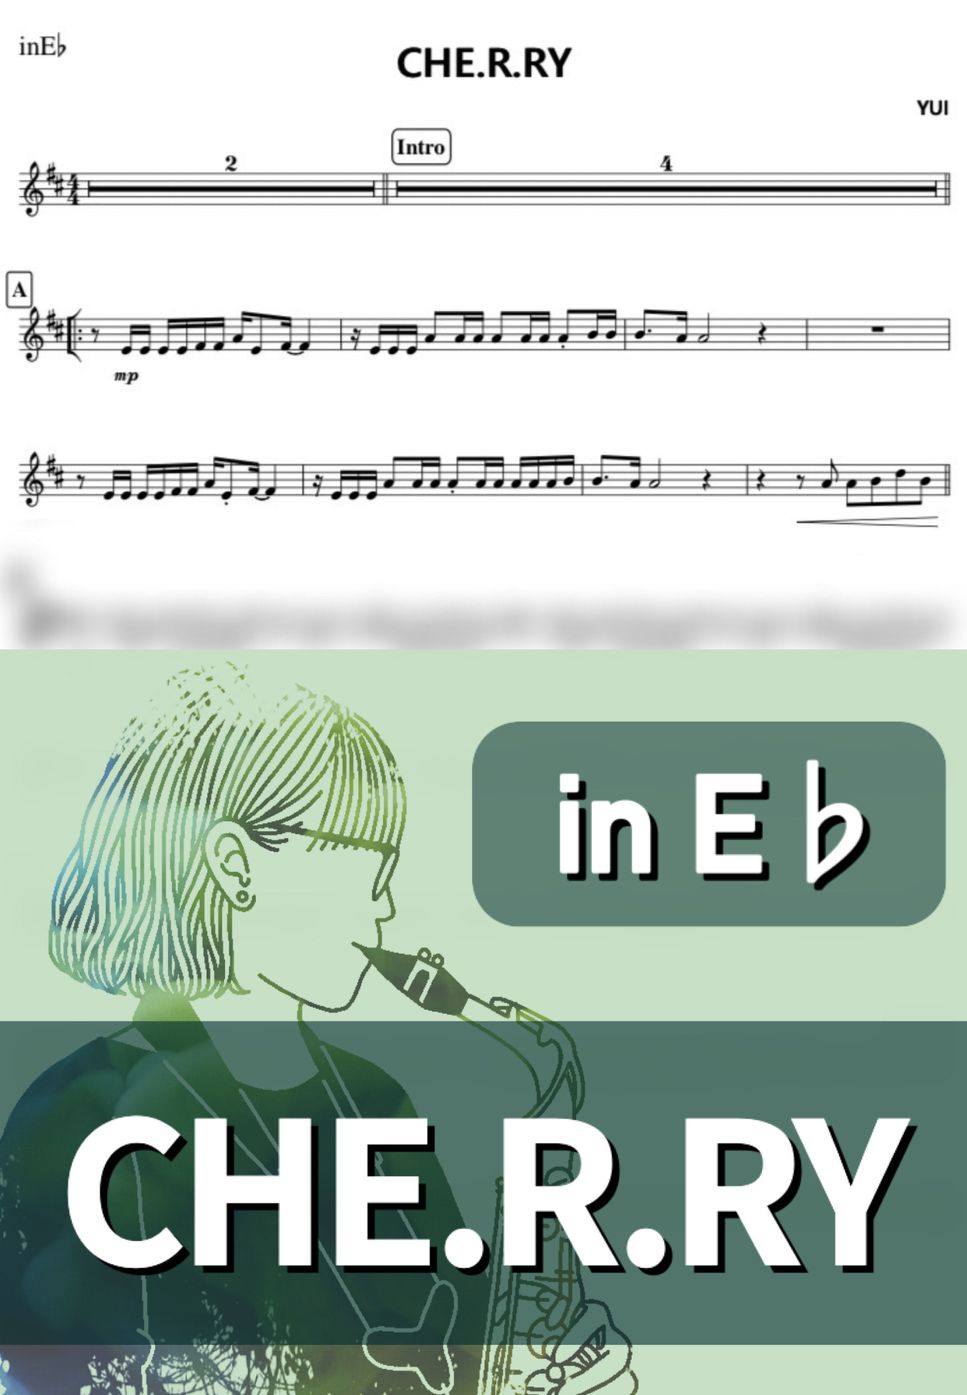 YUI - CHE.R.RY (E♭) by kanamusic